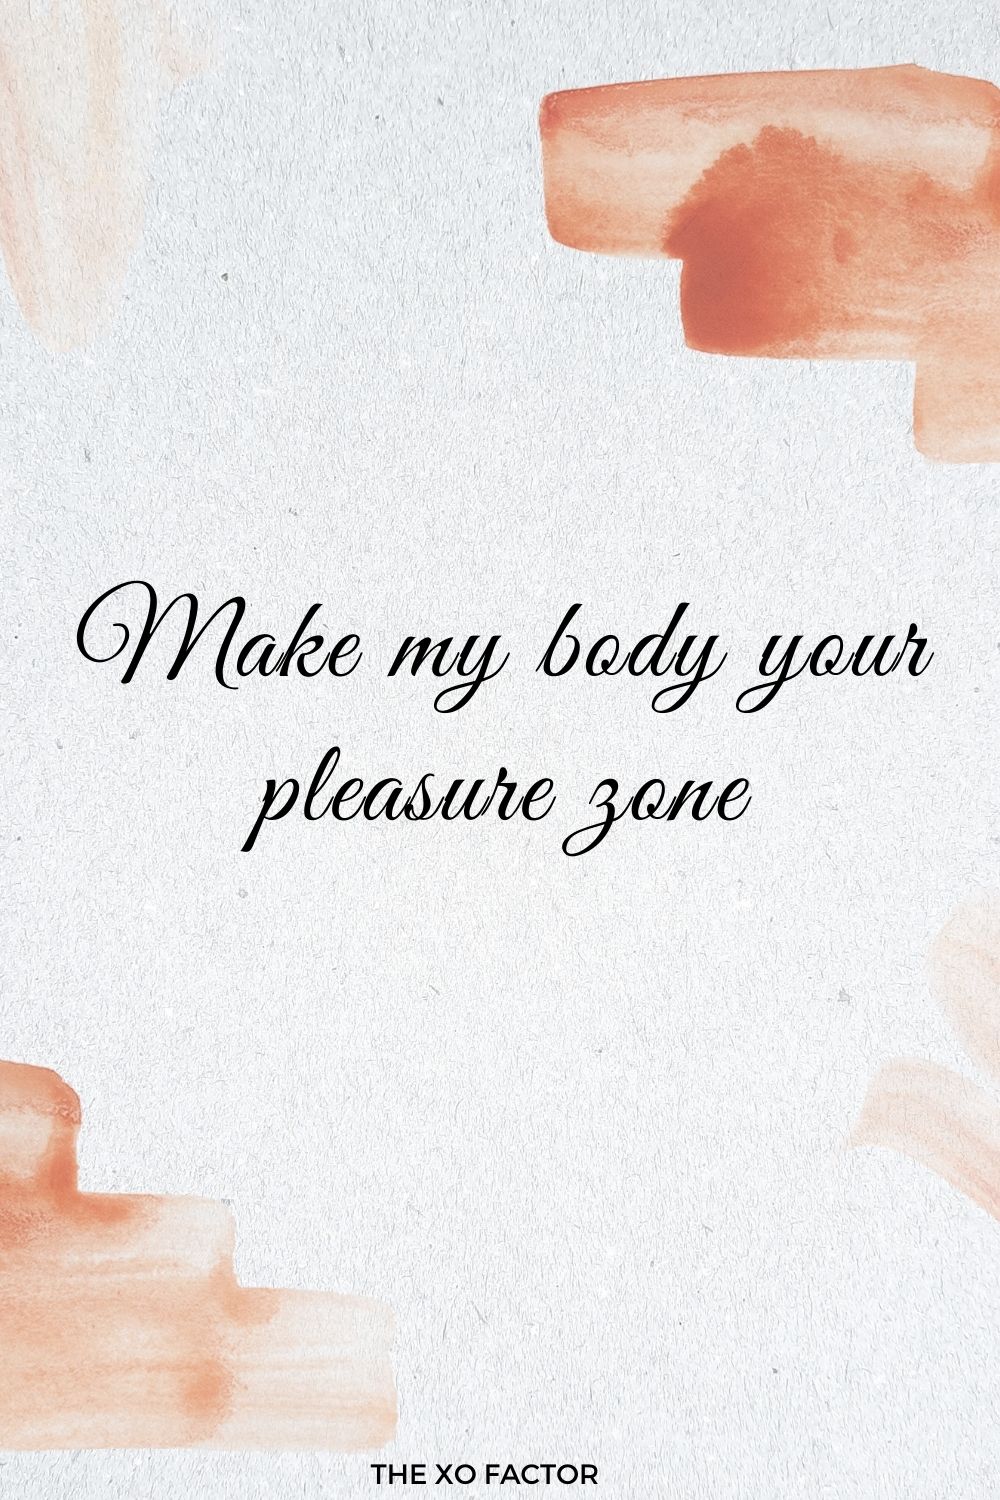 Make my body your pleasure zone